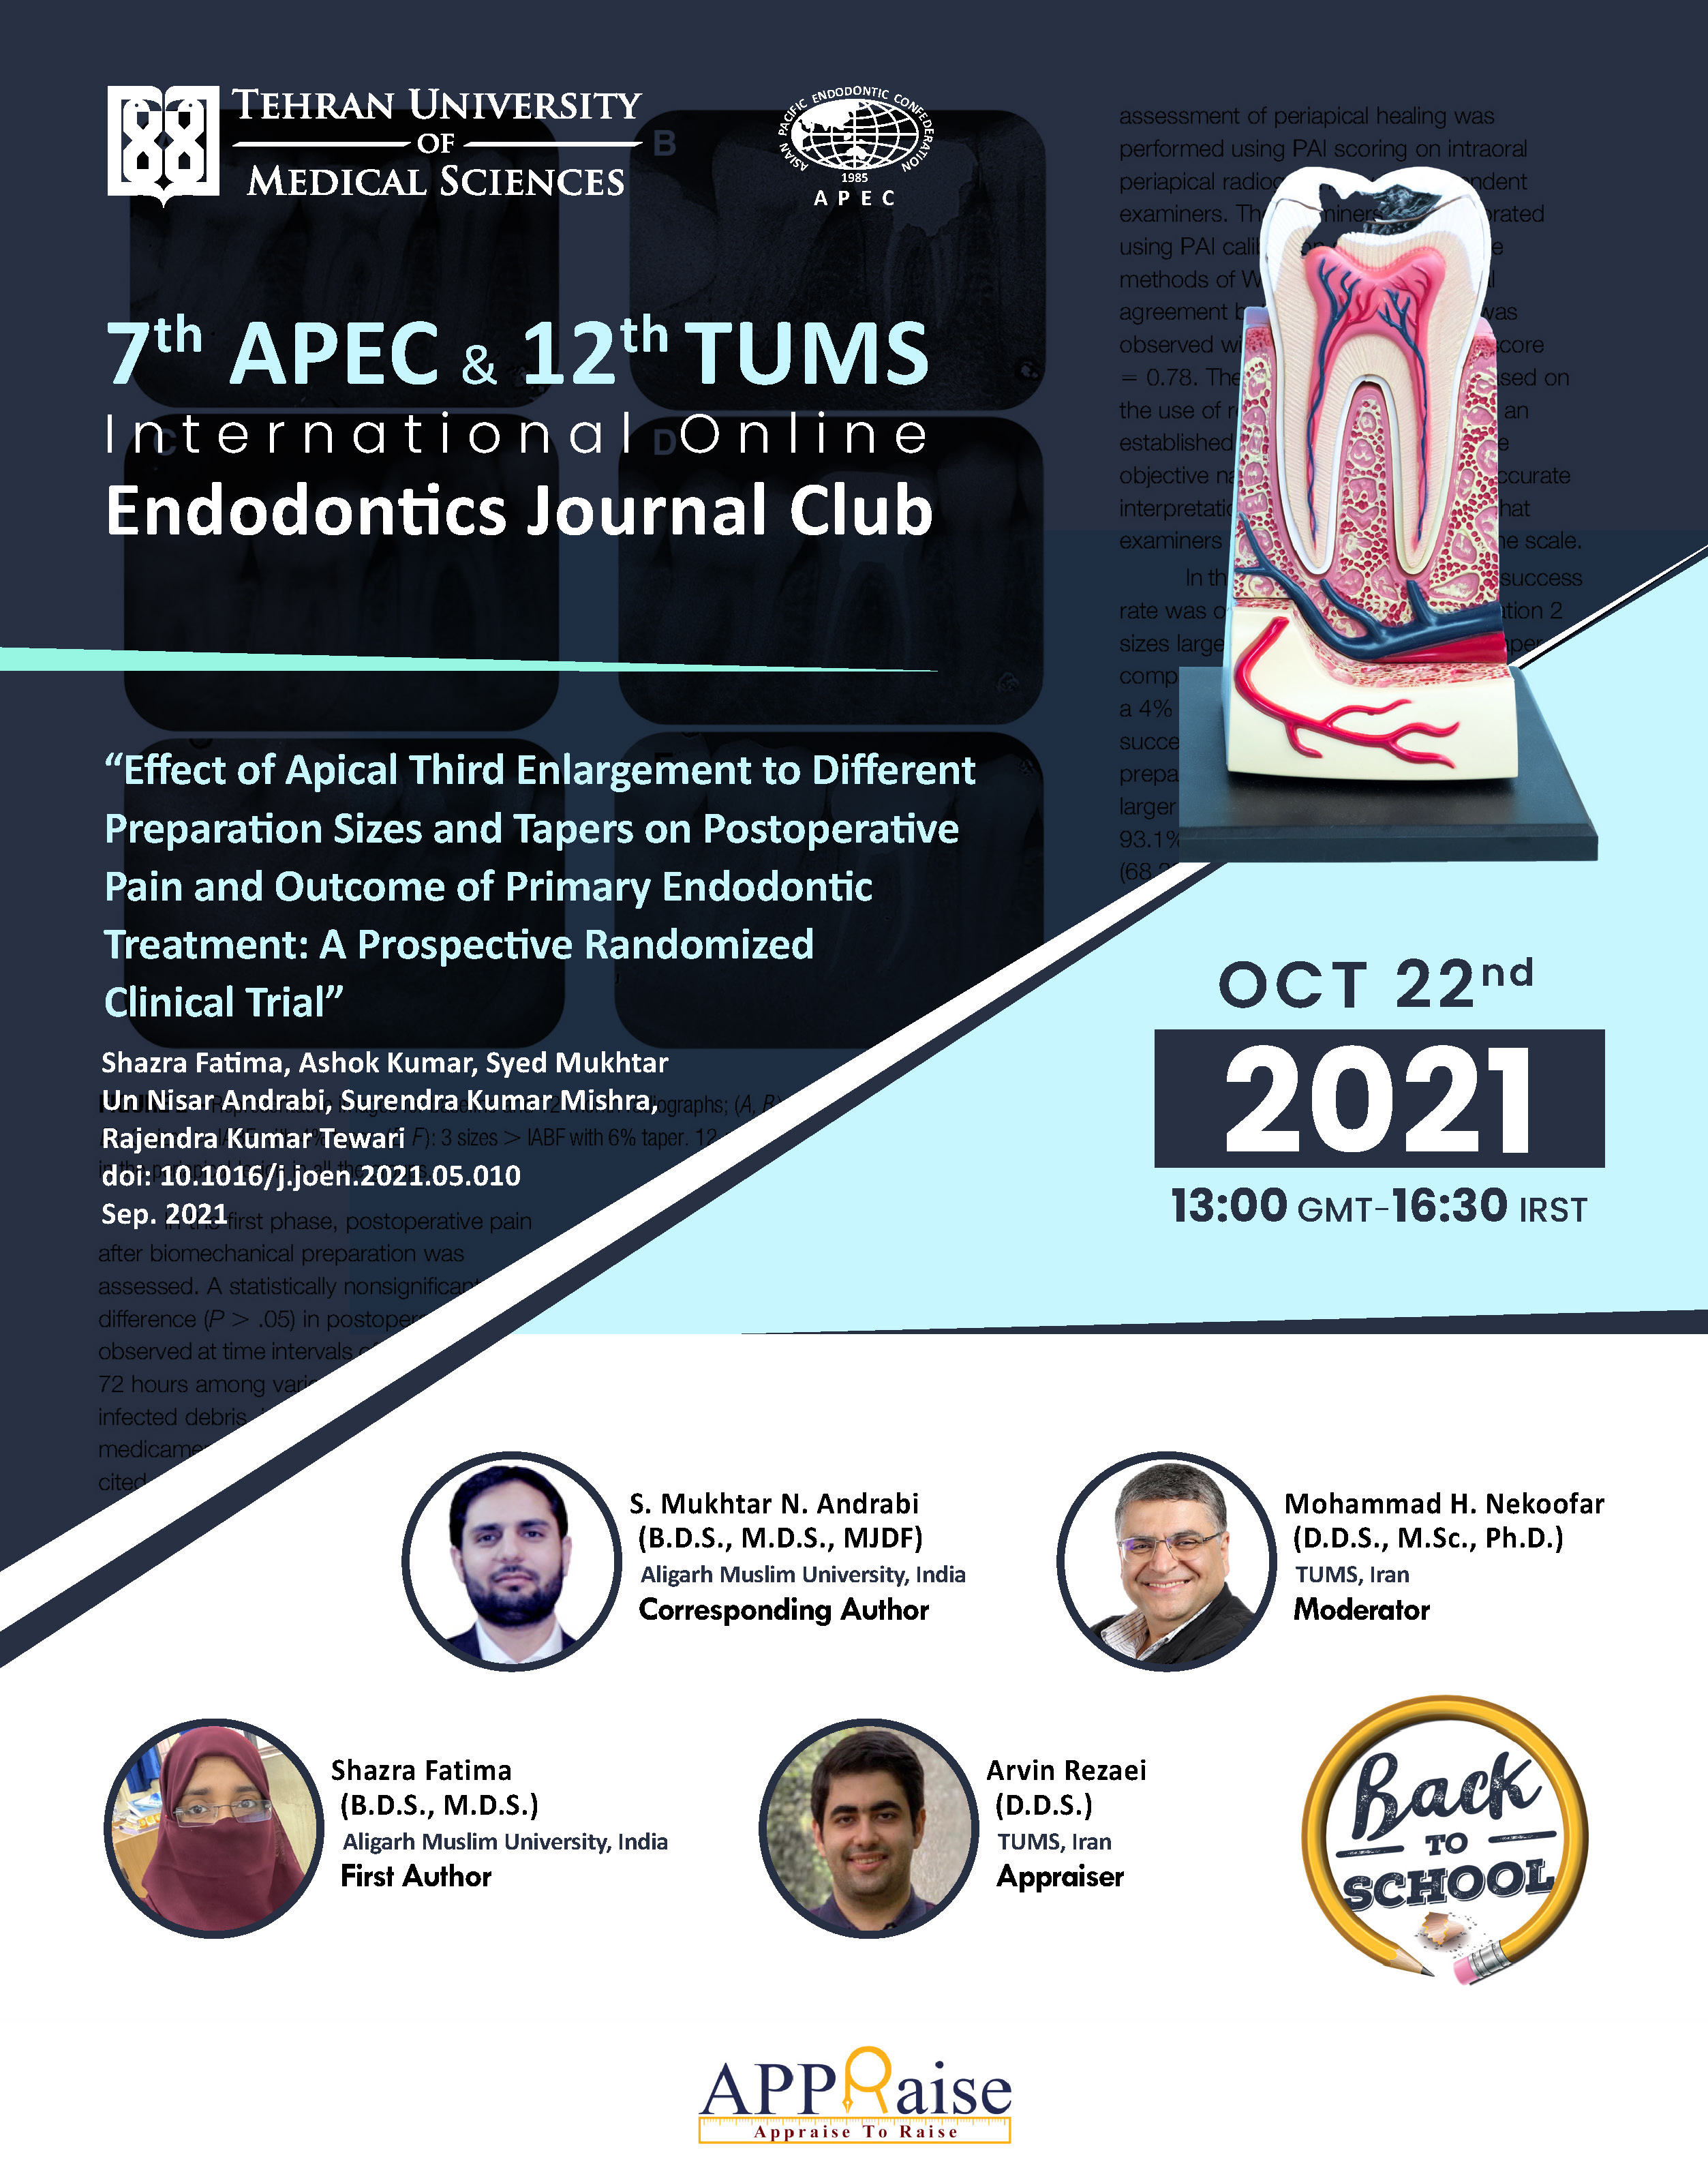 7th International Online Endodontic Journal Club of Asian Pacific Endodontic Confederation